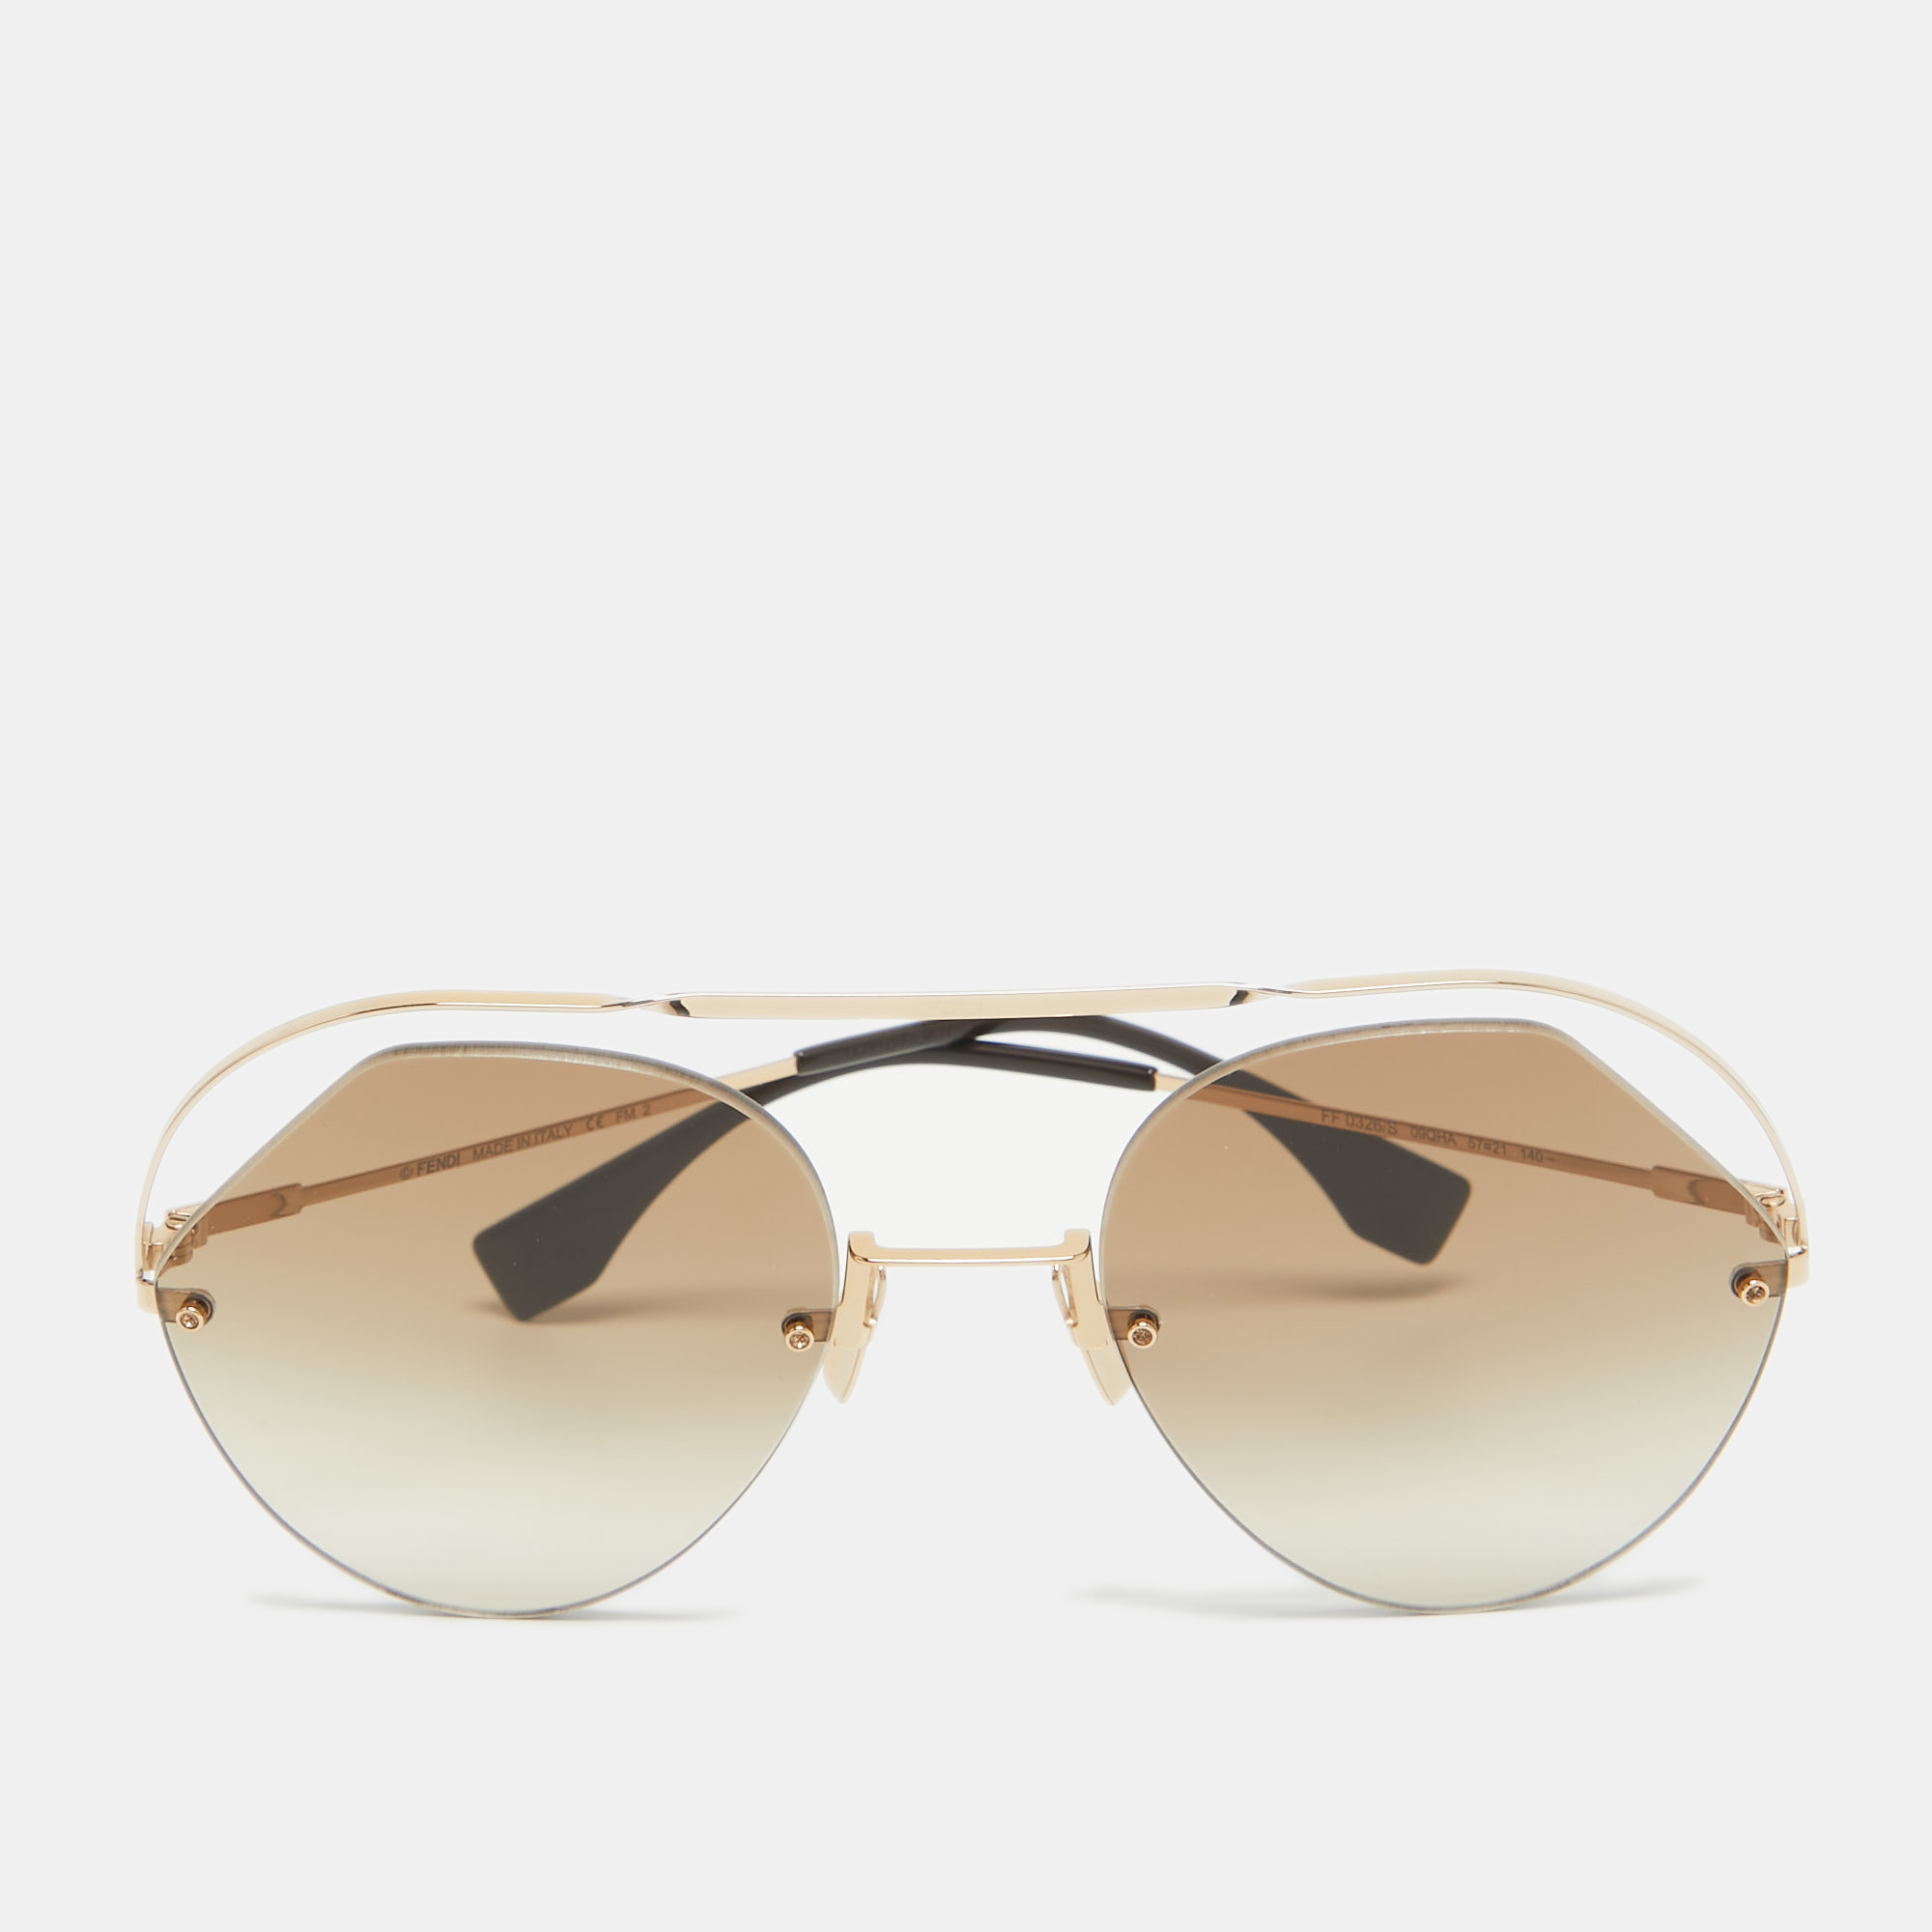 Fendi gold/brown gradient ff 0326/s rimless sunglasses